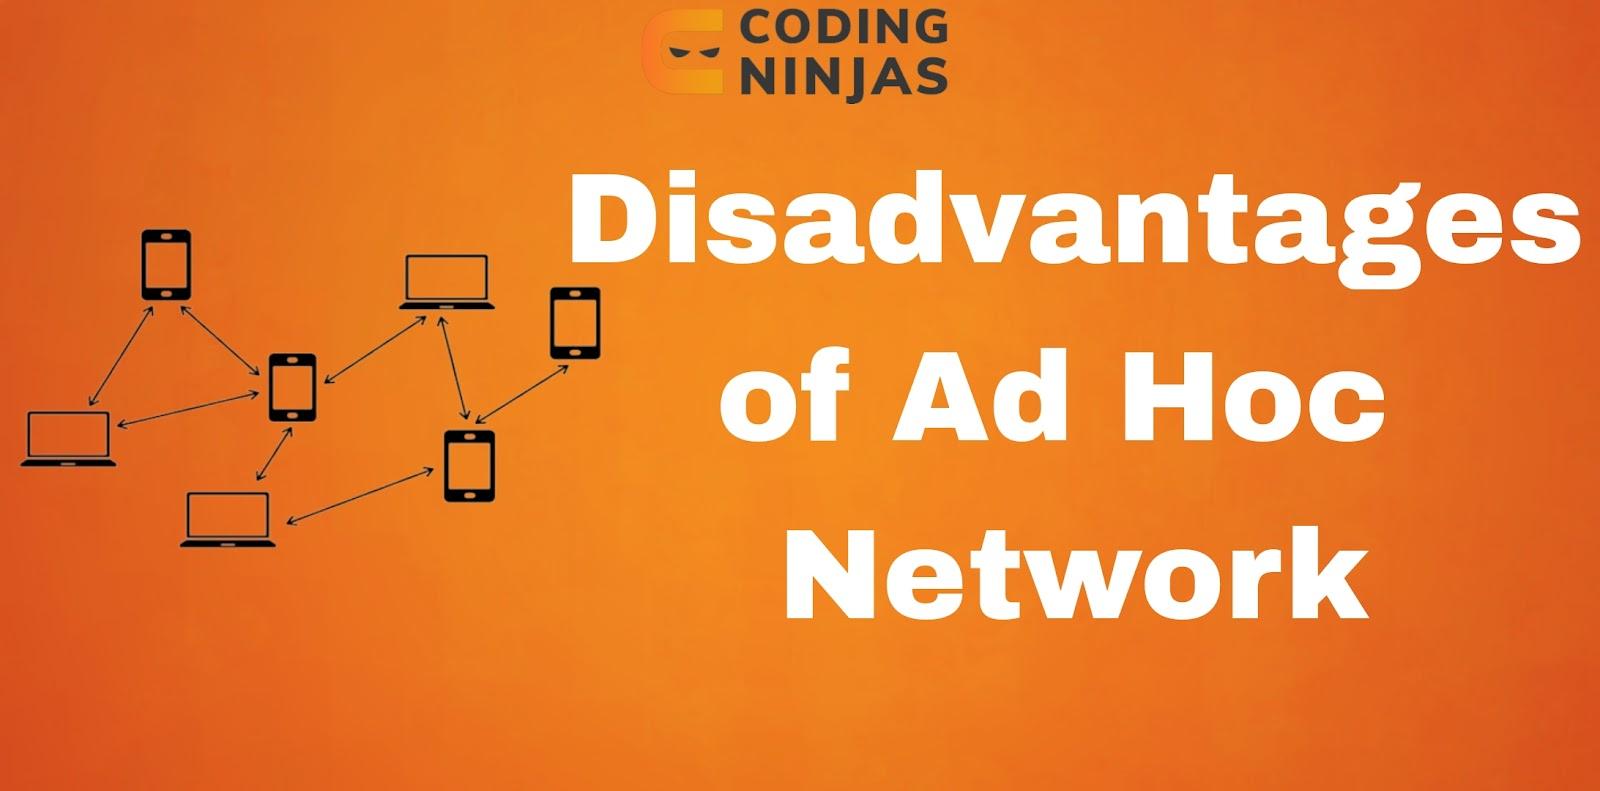 ad hoc network - Coding Ninjas